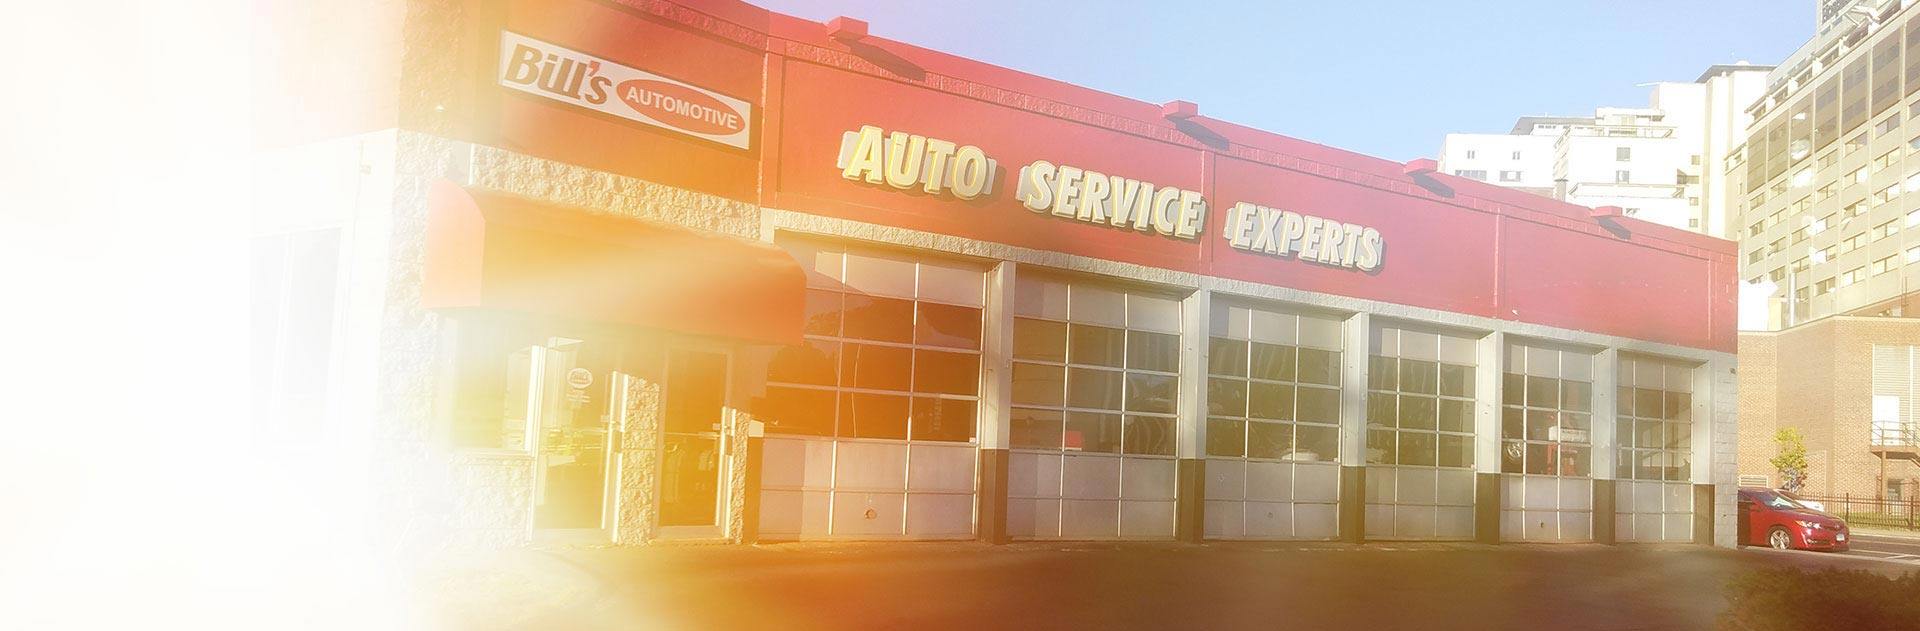 Hartford Auto Repair - Bill's Automotive